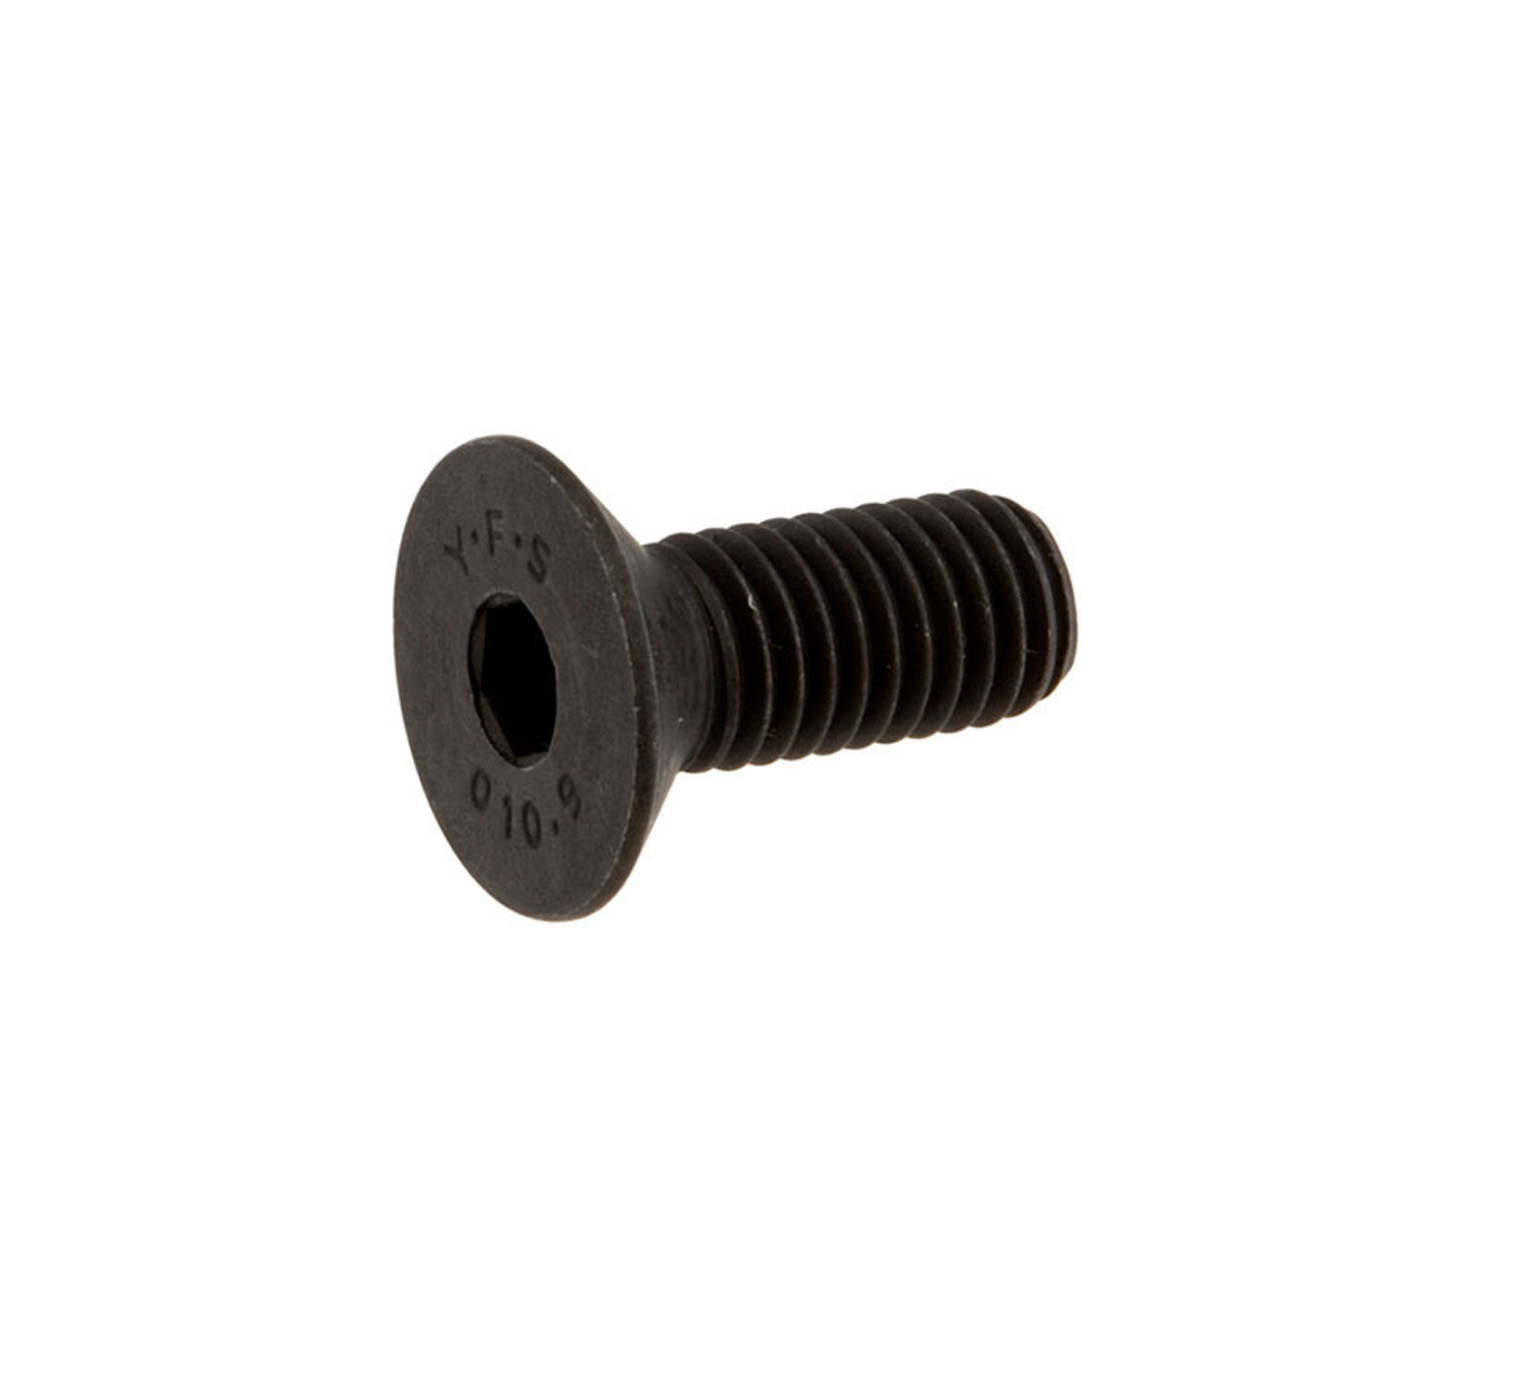 09081 Carbon Steel Screw - M10 Thread x 1 in alt 1